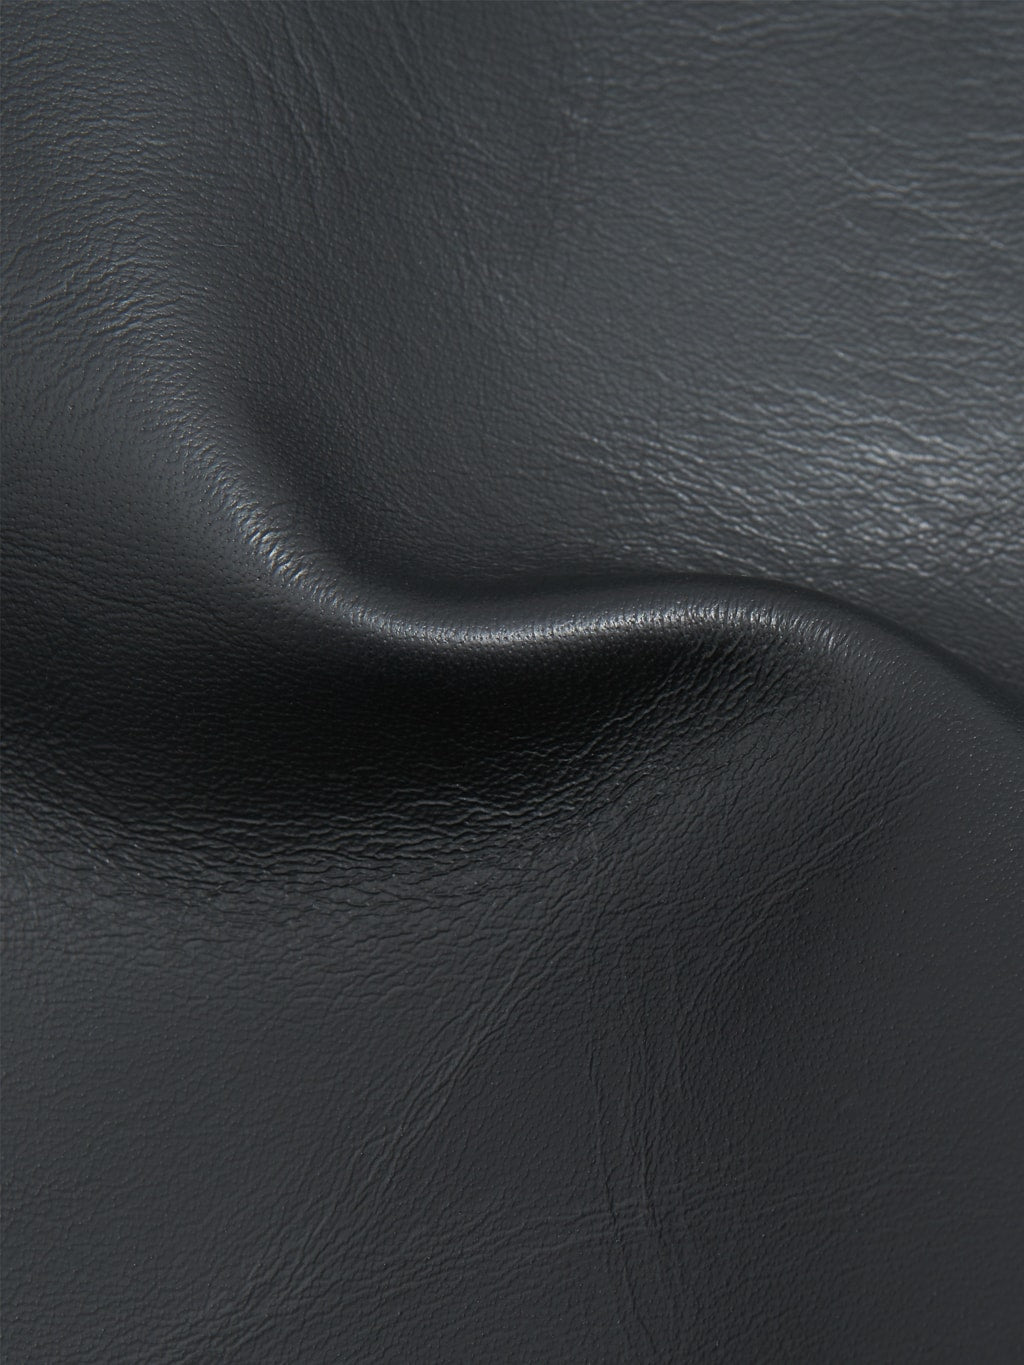 Trophy Clothing Humming Bird Horsehide leather Jacket Black  texture closeup